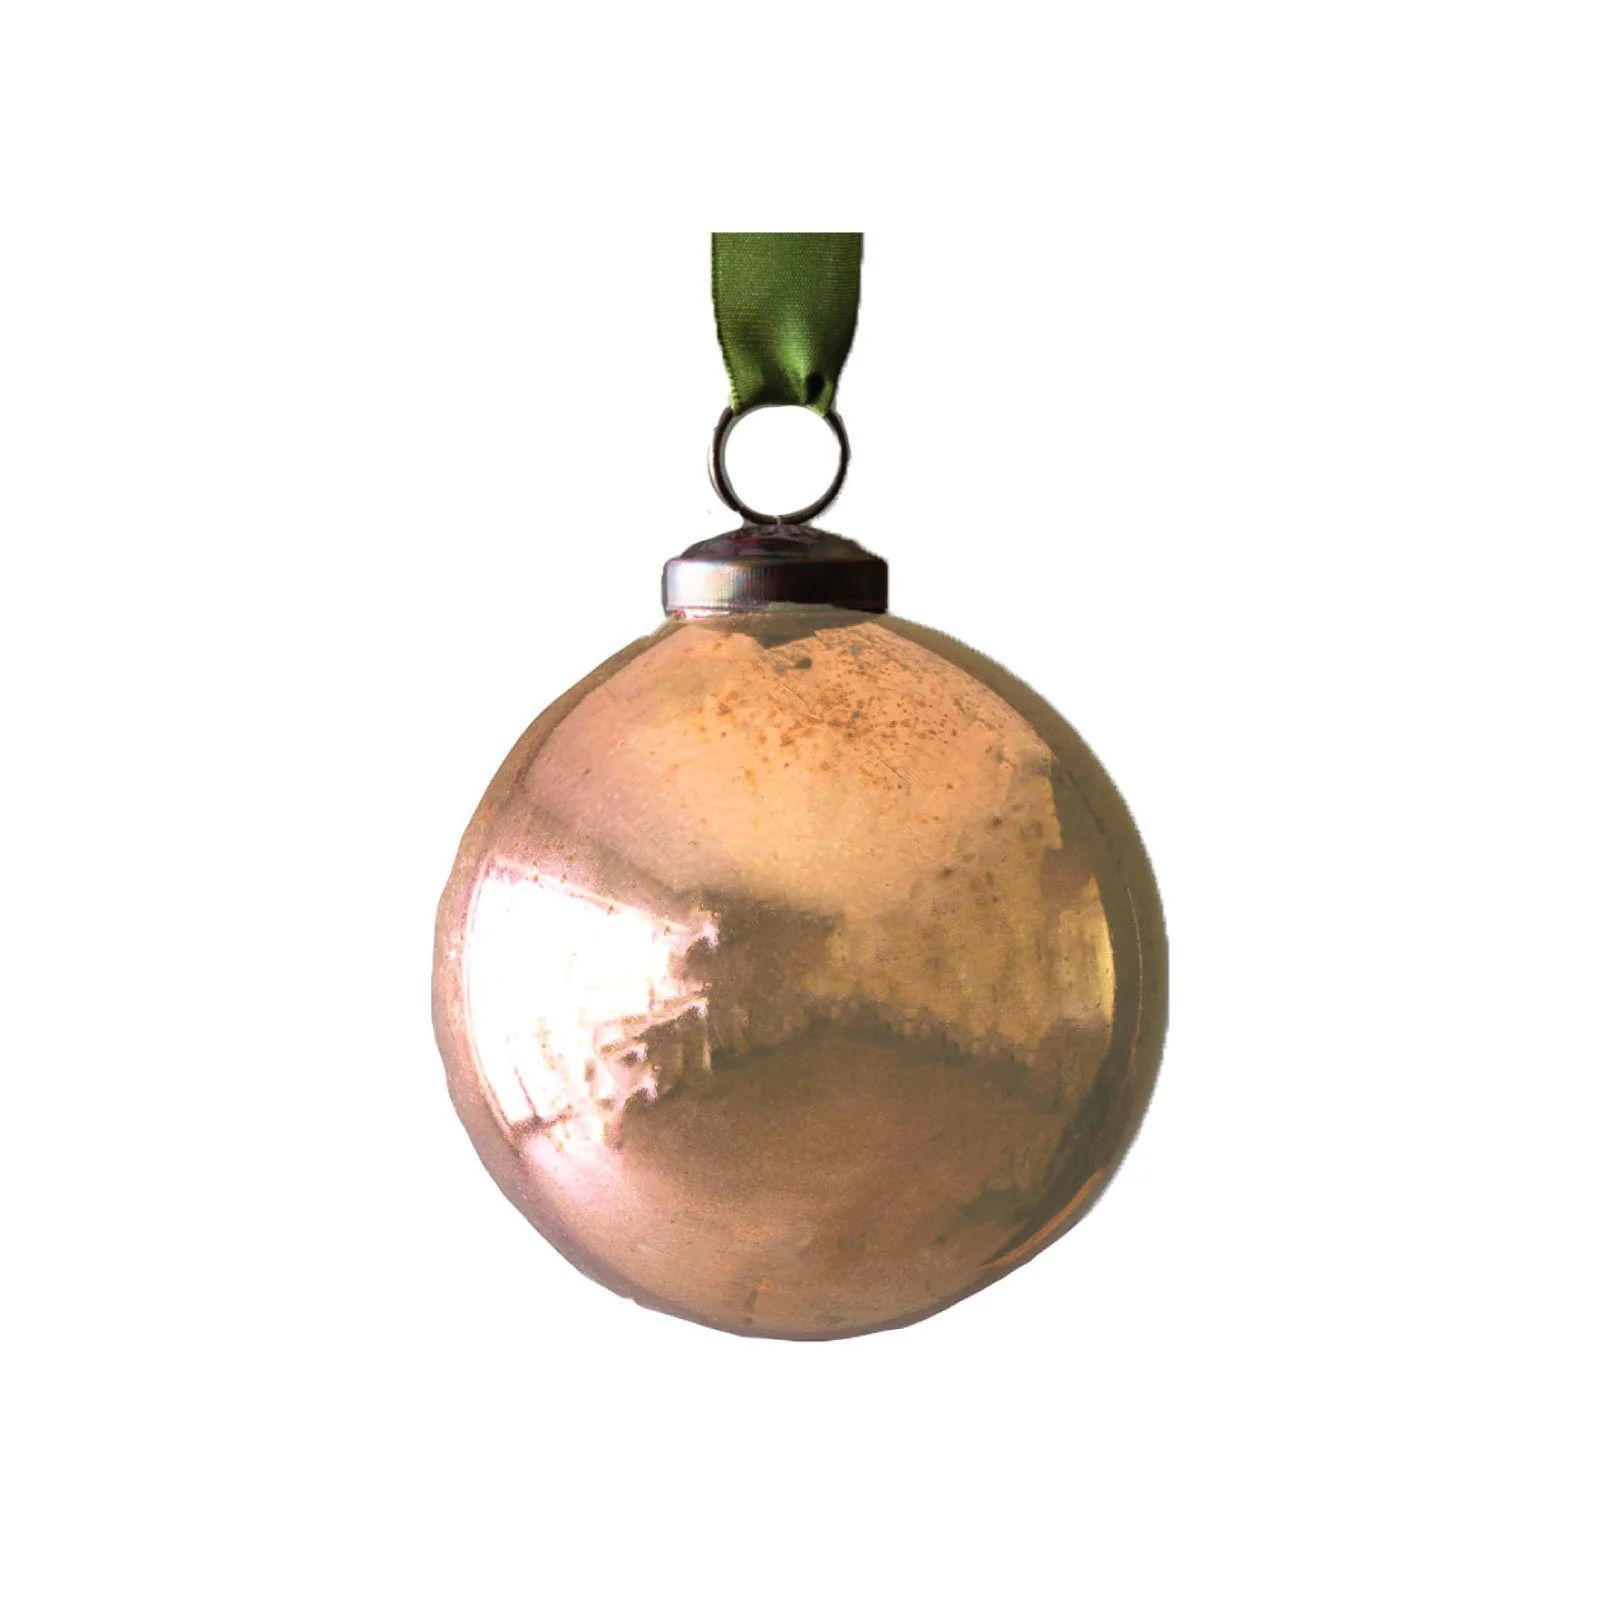 Antique Shiny Copper Ball Ornament | Brooke and Lou